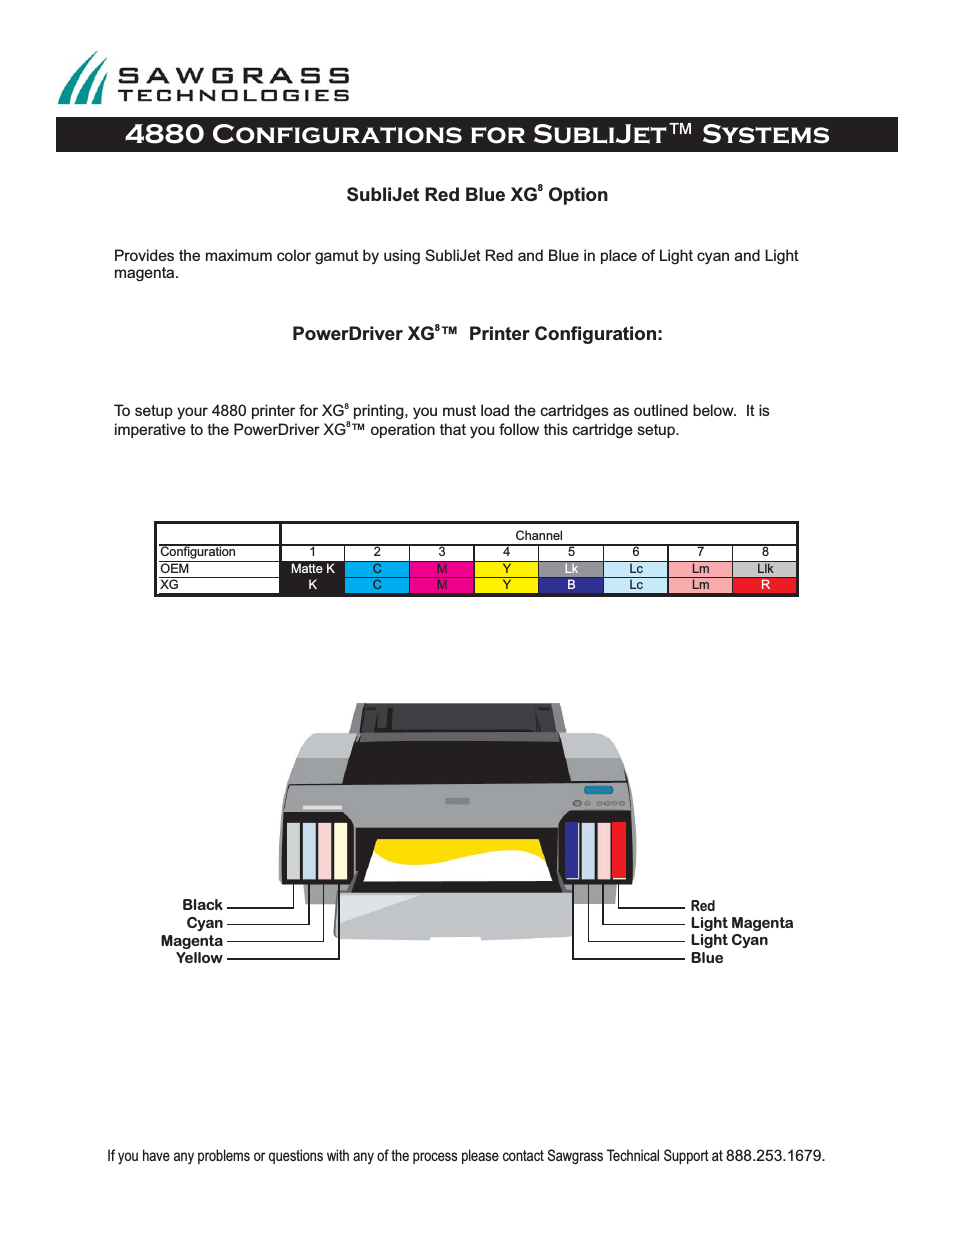 SubliJet IQ EPSON Stylus PRO 4880 (Windows Power Driver Setup): Sublimation Ink Configuration Guide